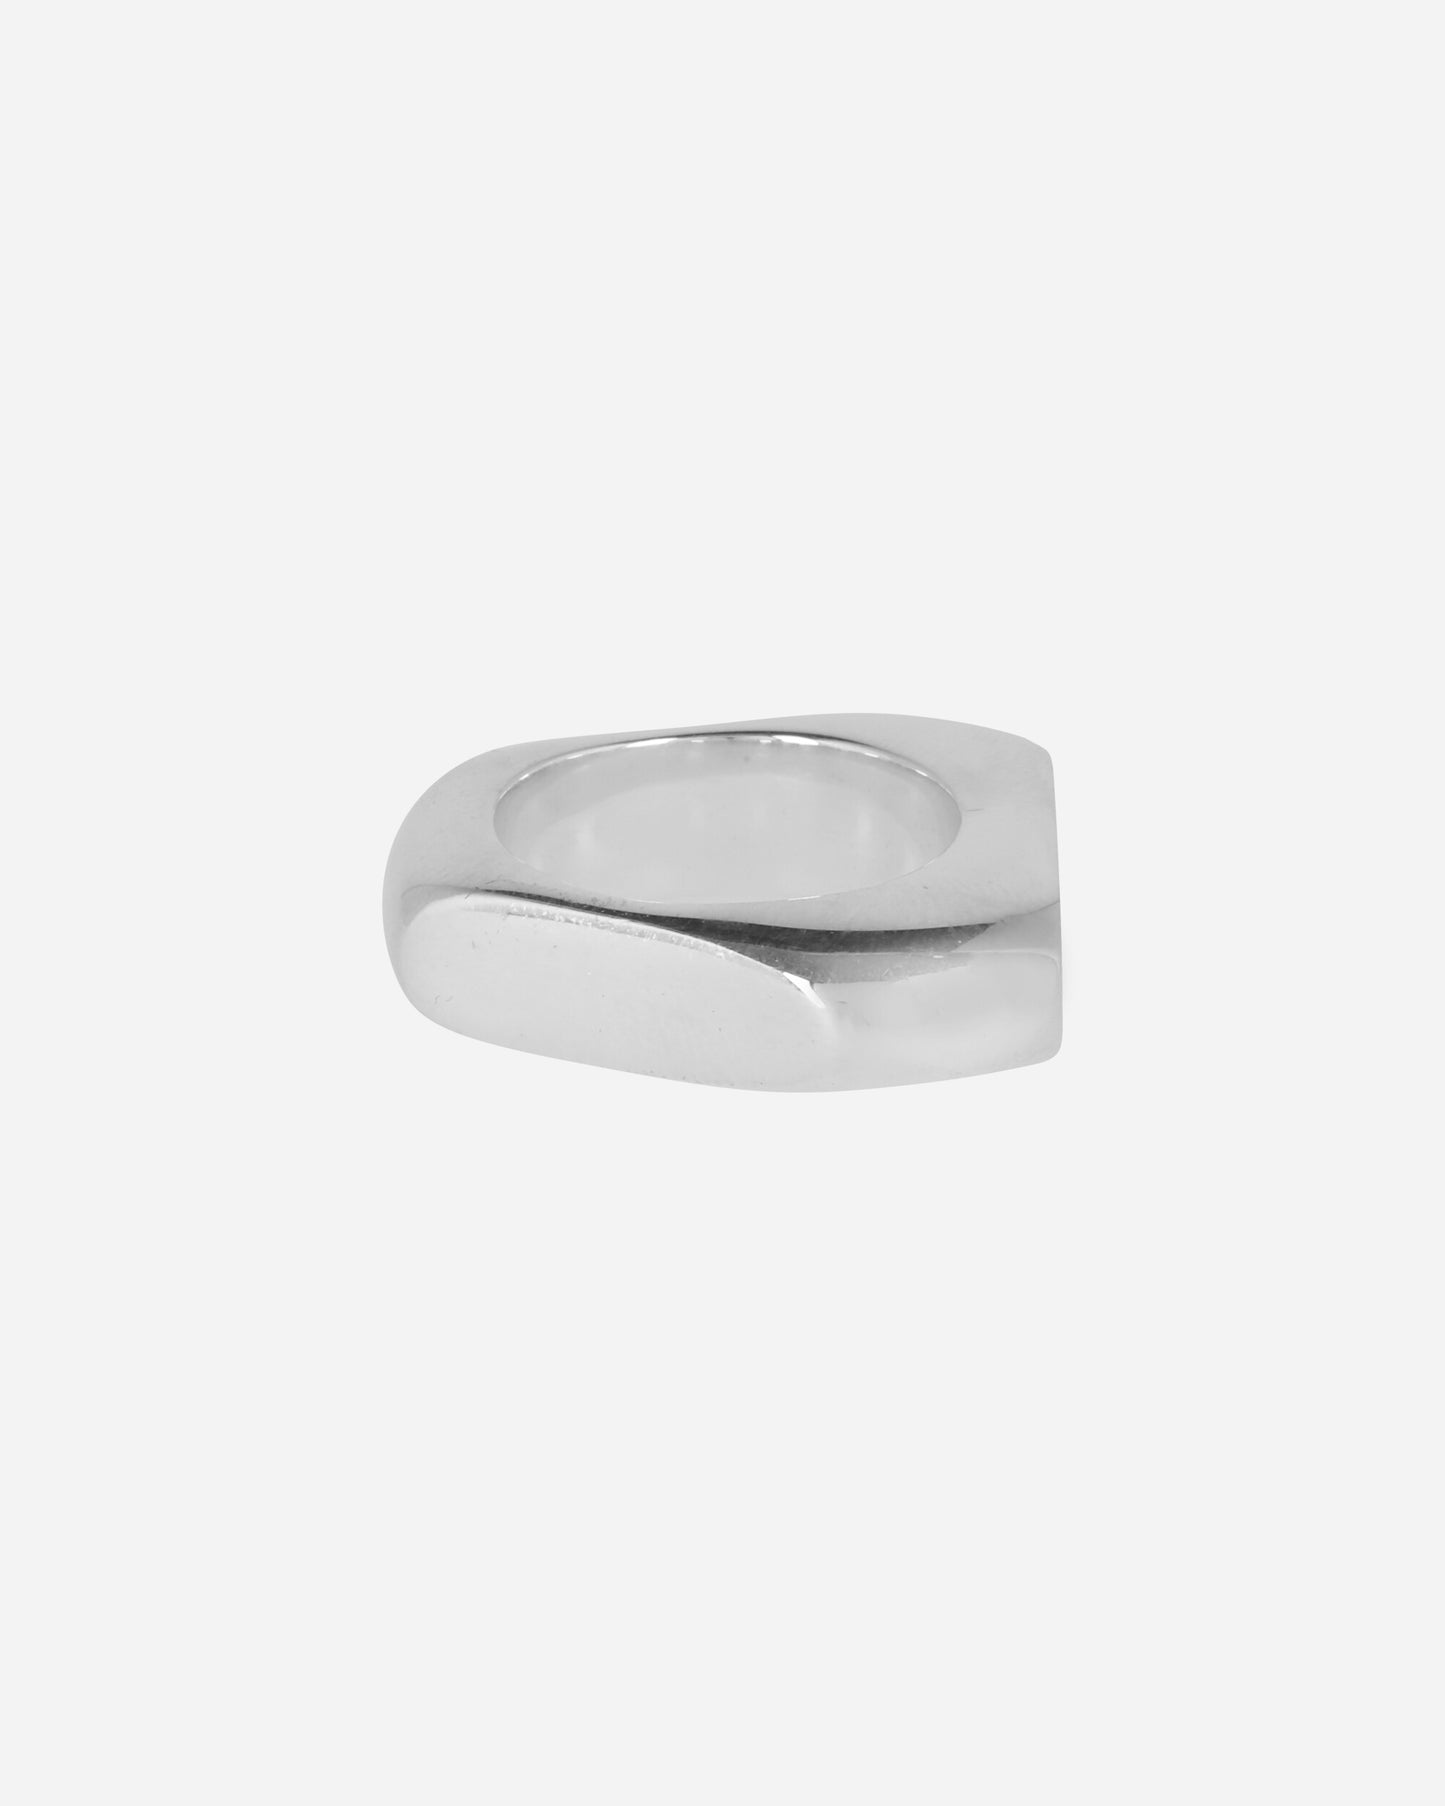 Octi Ergo Ring (Thin) Silver Jewellery Rings ERG NS01